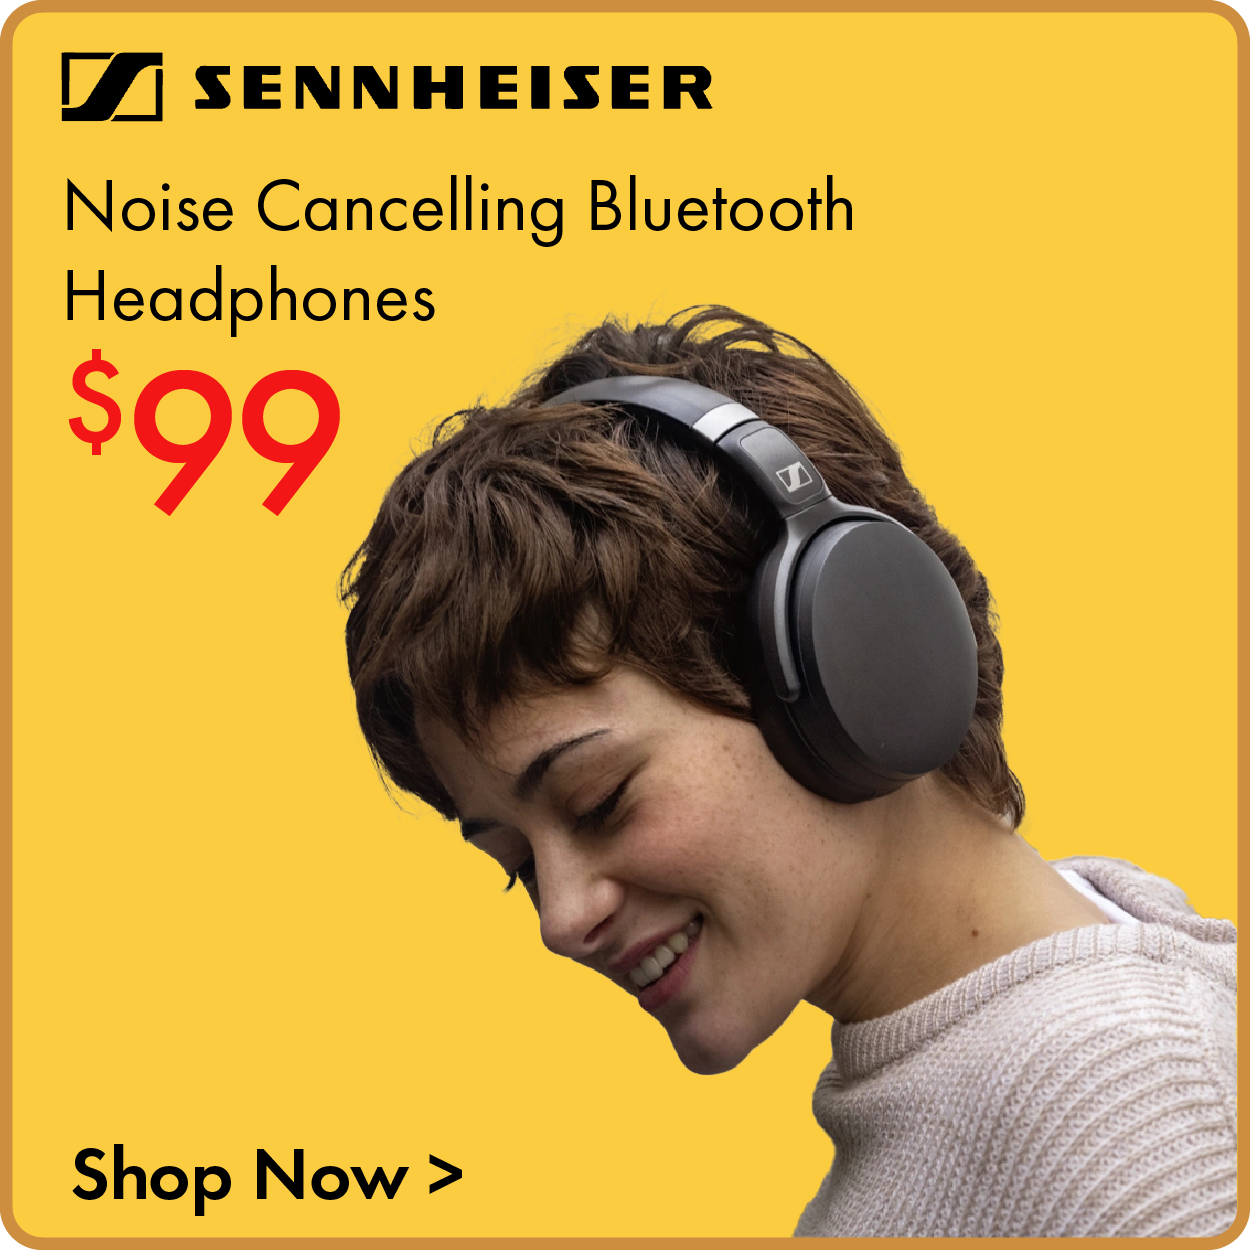 Sennheiser HD 4.50 BTNC Closed-Back Noise Cancelling Bluetooth Headphones now $99